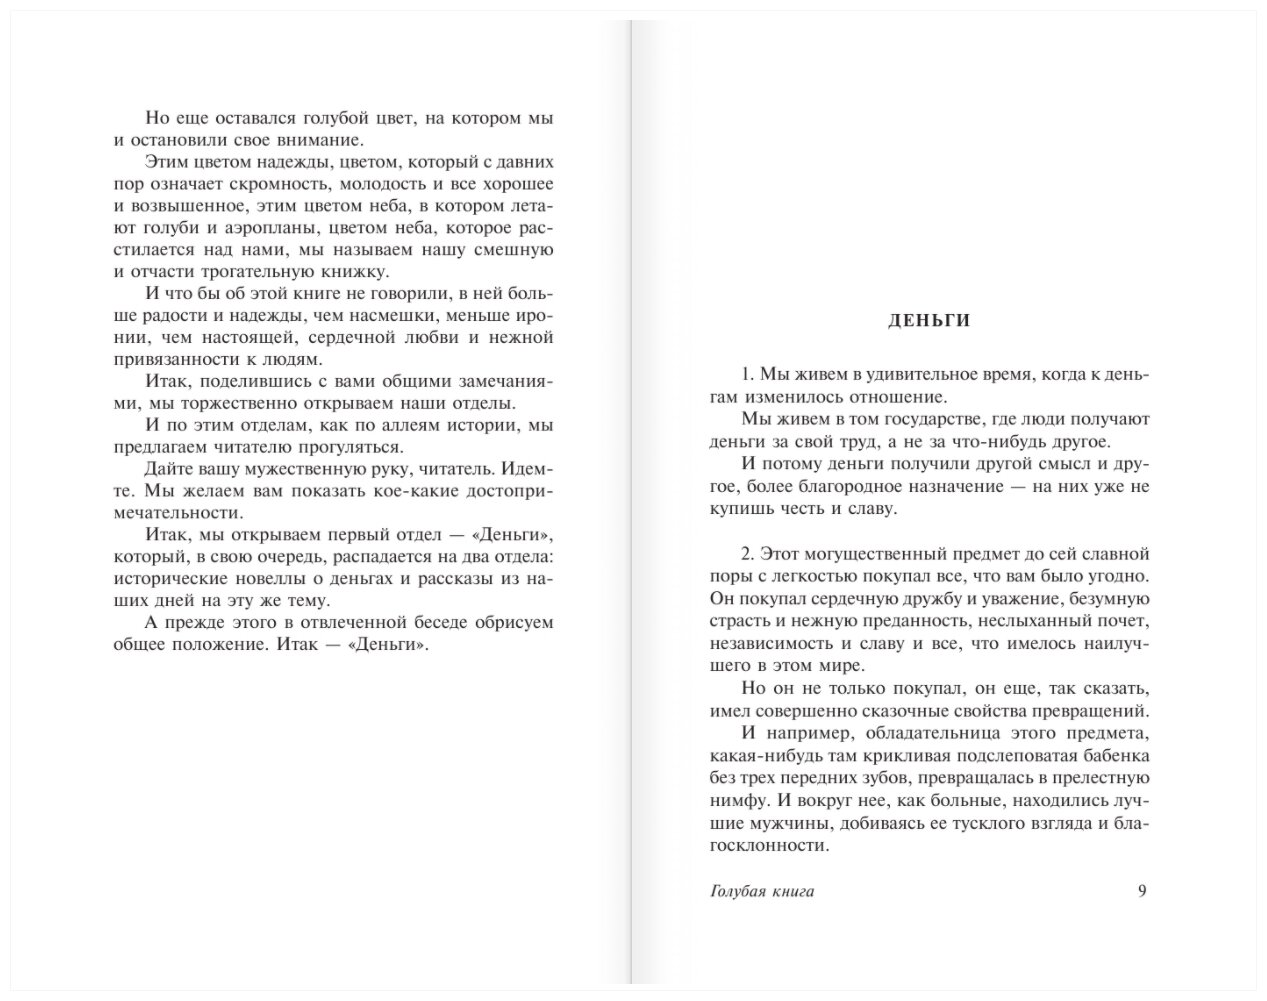 Голубая книга (Зощенко Михаил Михайлович) - фото №3